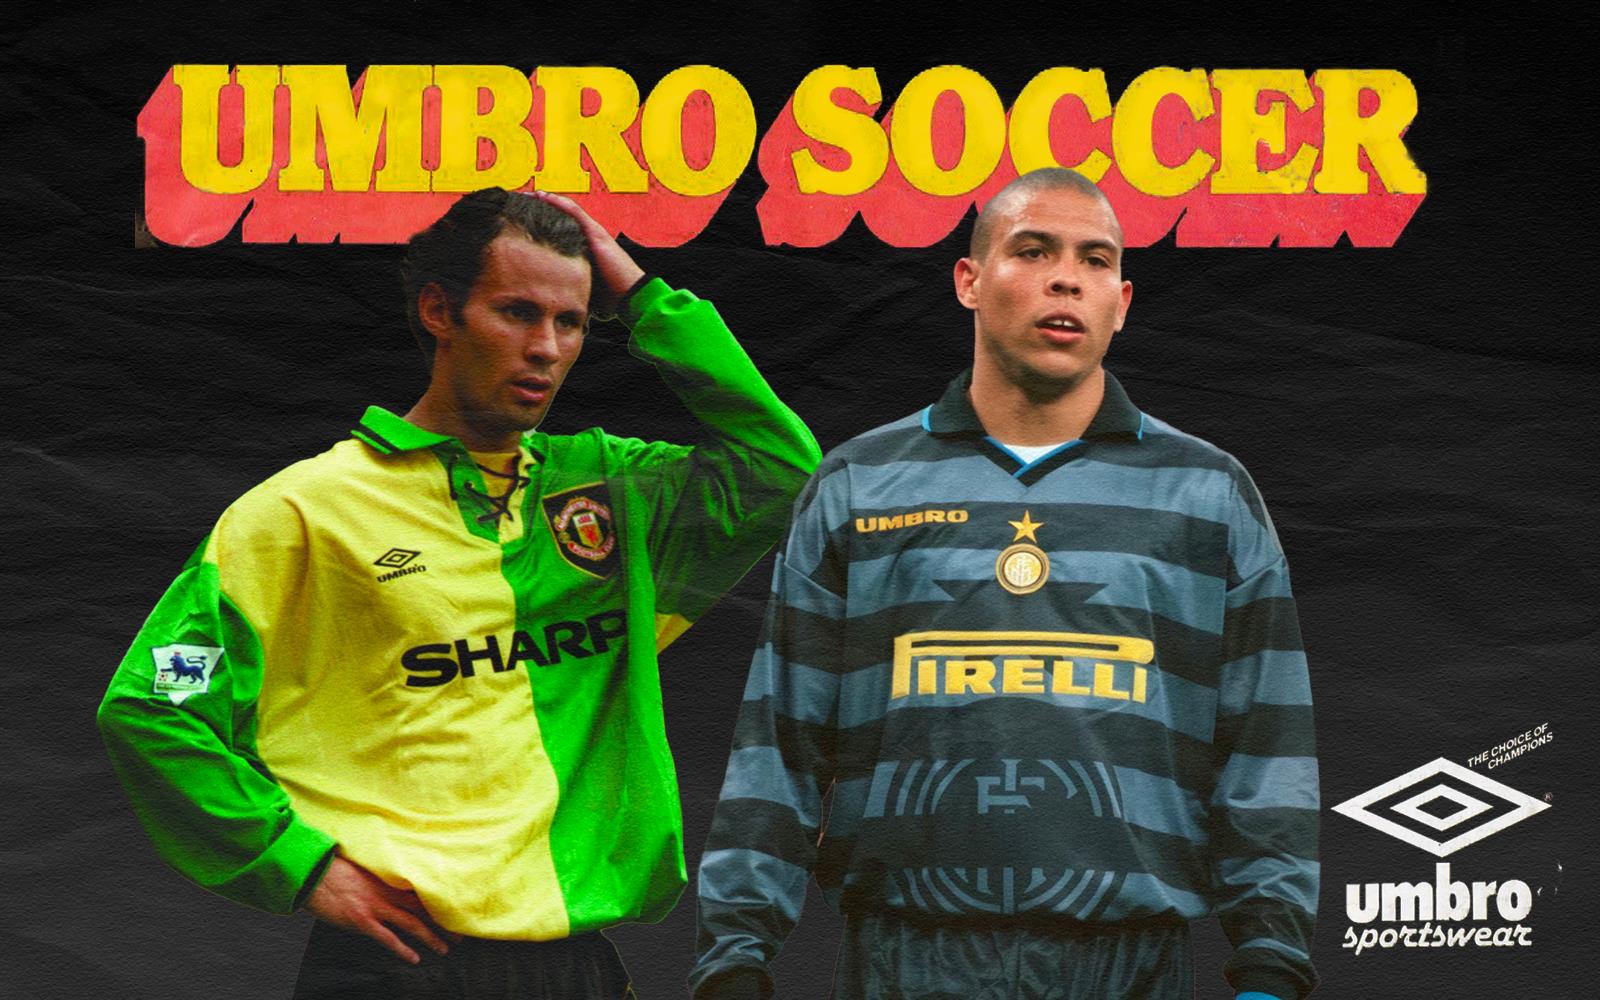 is umbro a good soccer brand